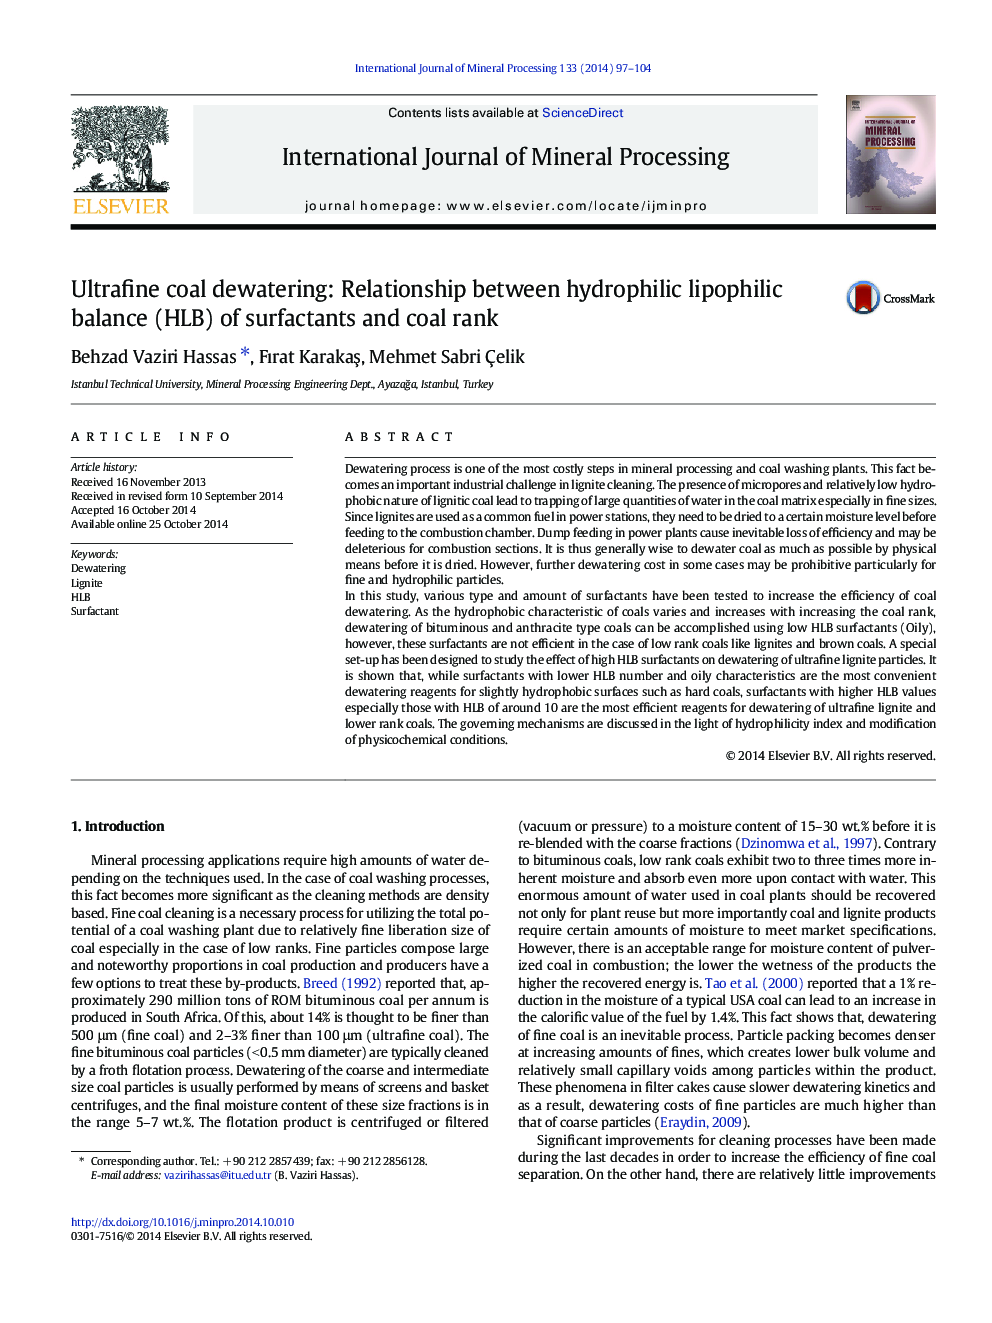 Ultrafine coal dewatering: Relationship between hydrophilic lipophilic balance (HLB) of surfactants and coal rank